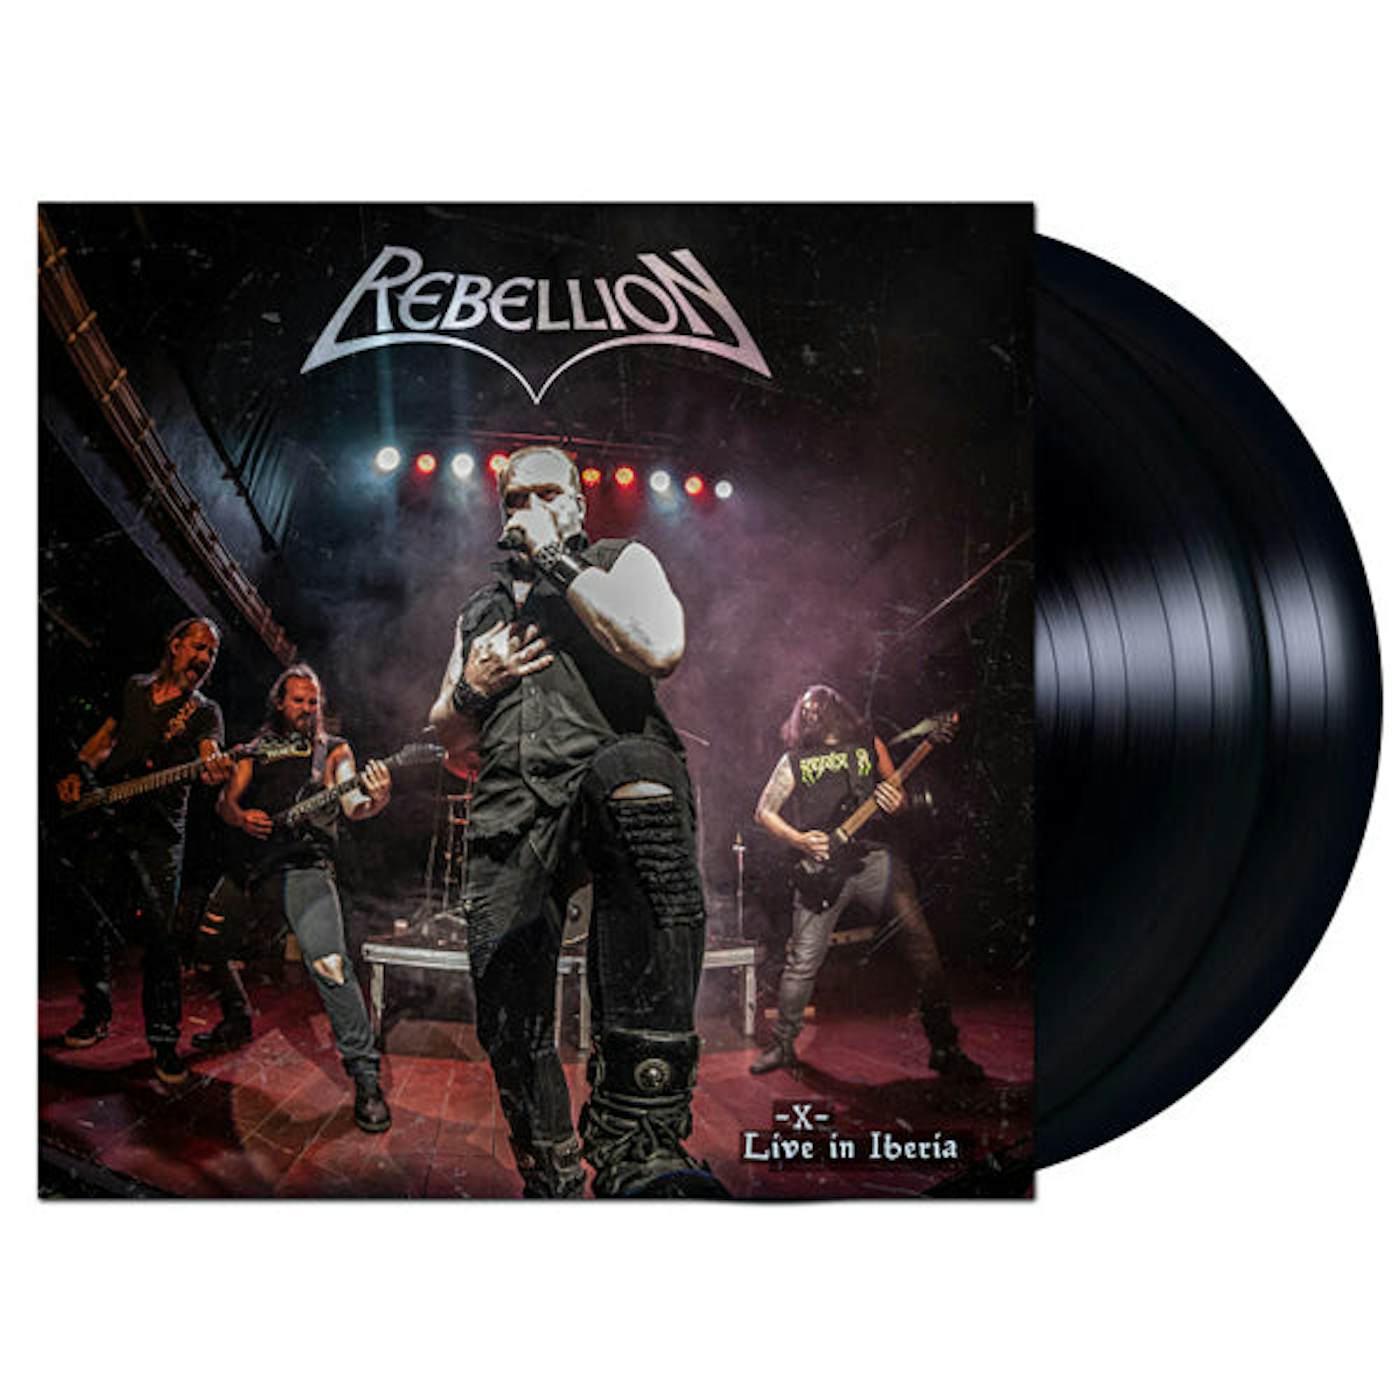 Rebellion LP - X - Live In Iberia (2lp) (Vinyl)